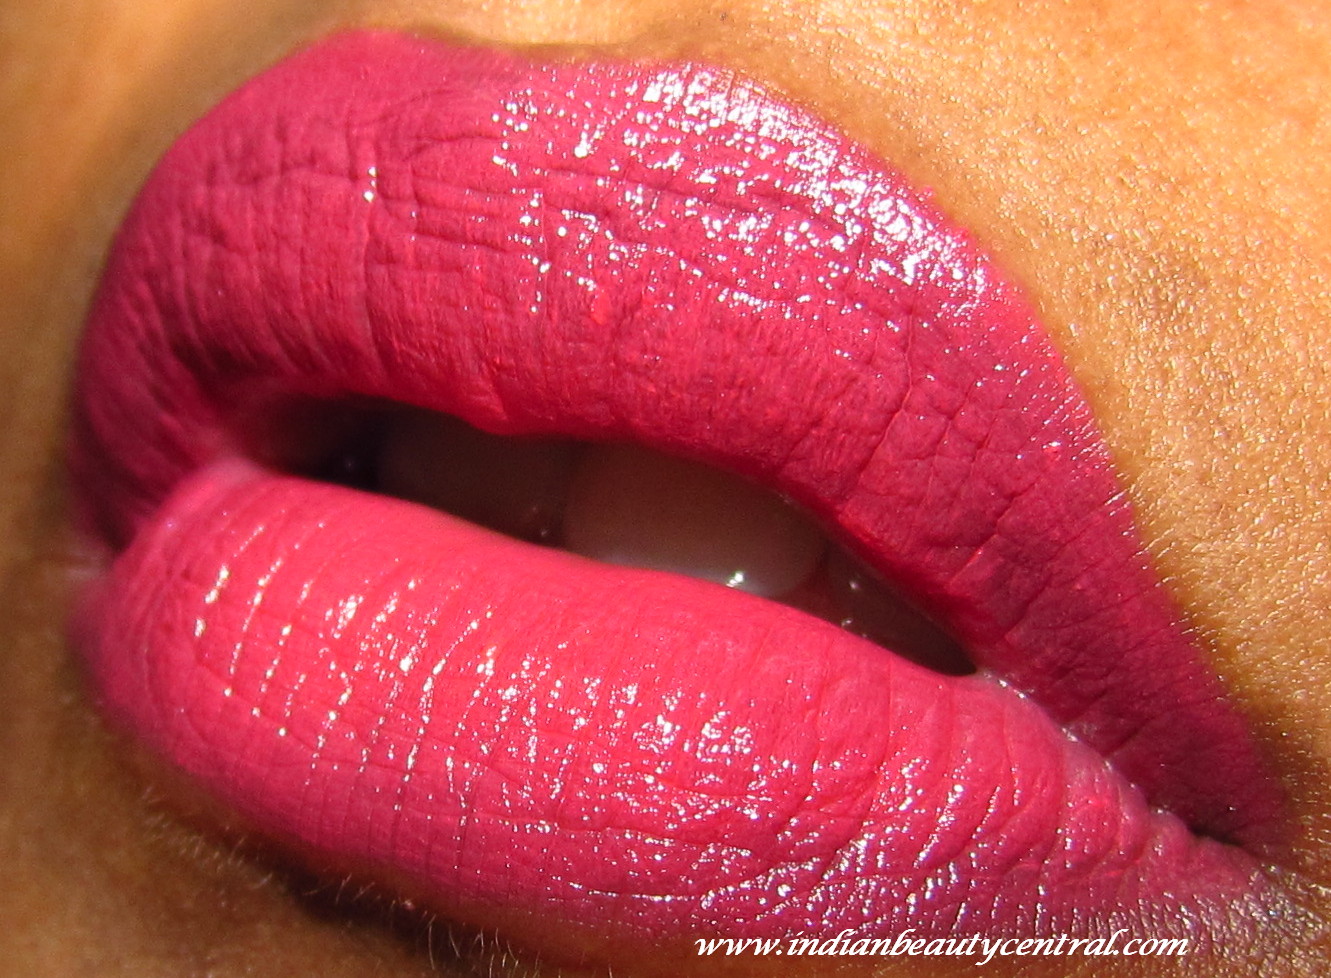 Mac Impassioned Lipstick On Indian Skin Lipstick Gallery